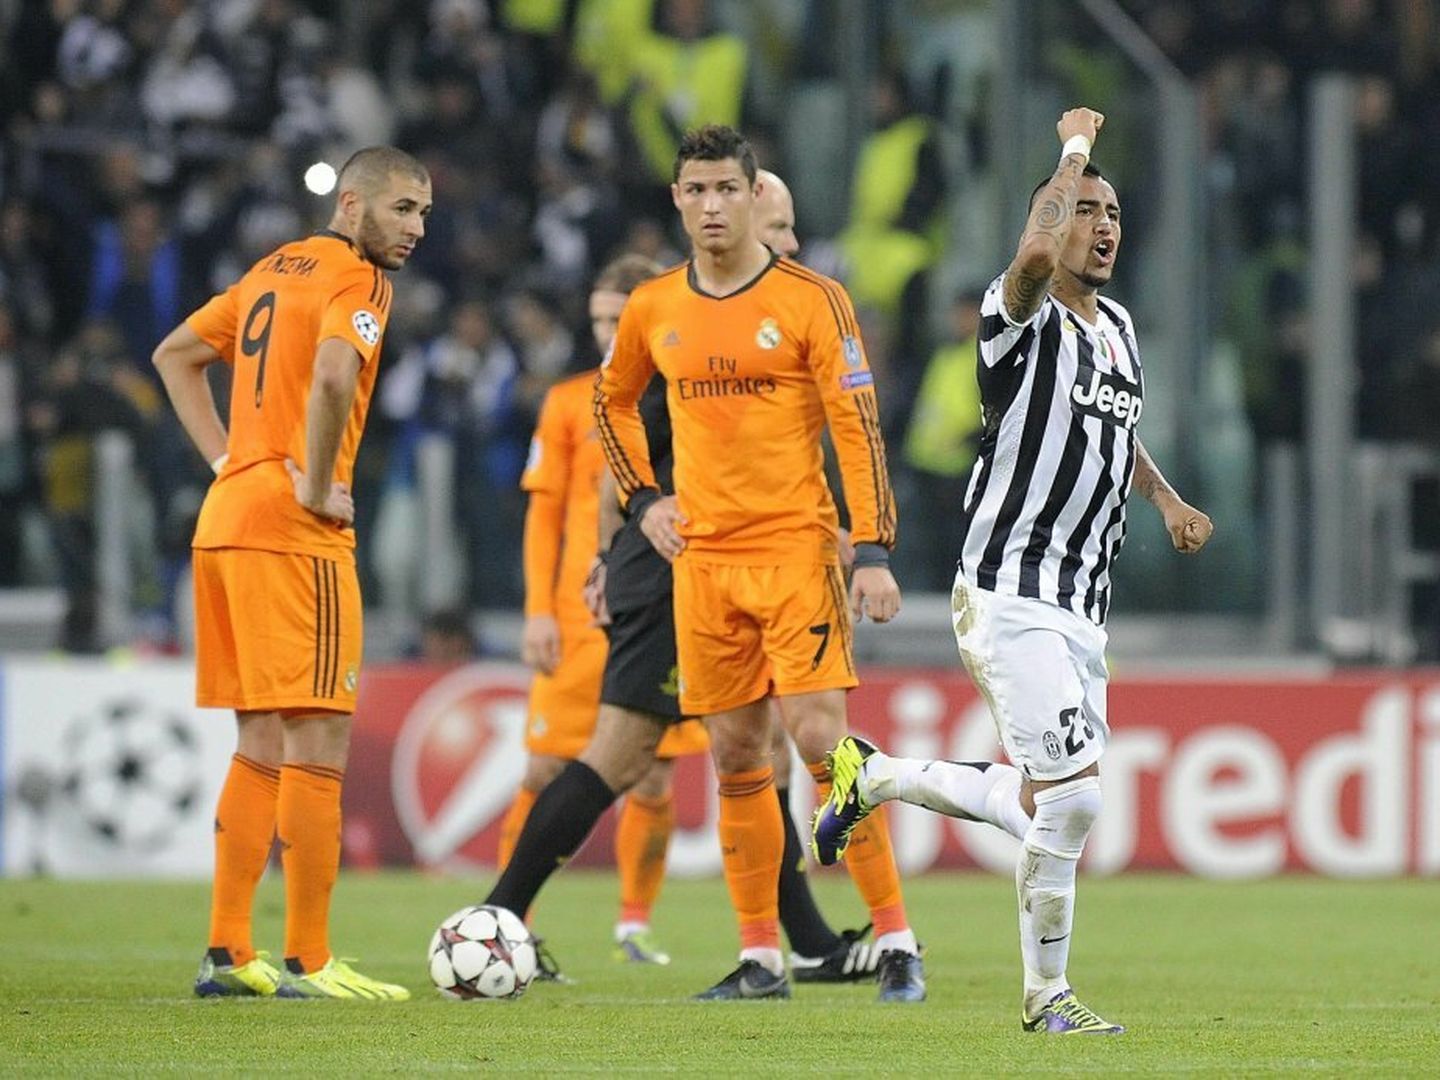 Juventus' vidal celebrates after scoring against real madrid during their champions league soccer match at juventus stadium in turin